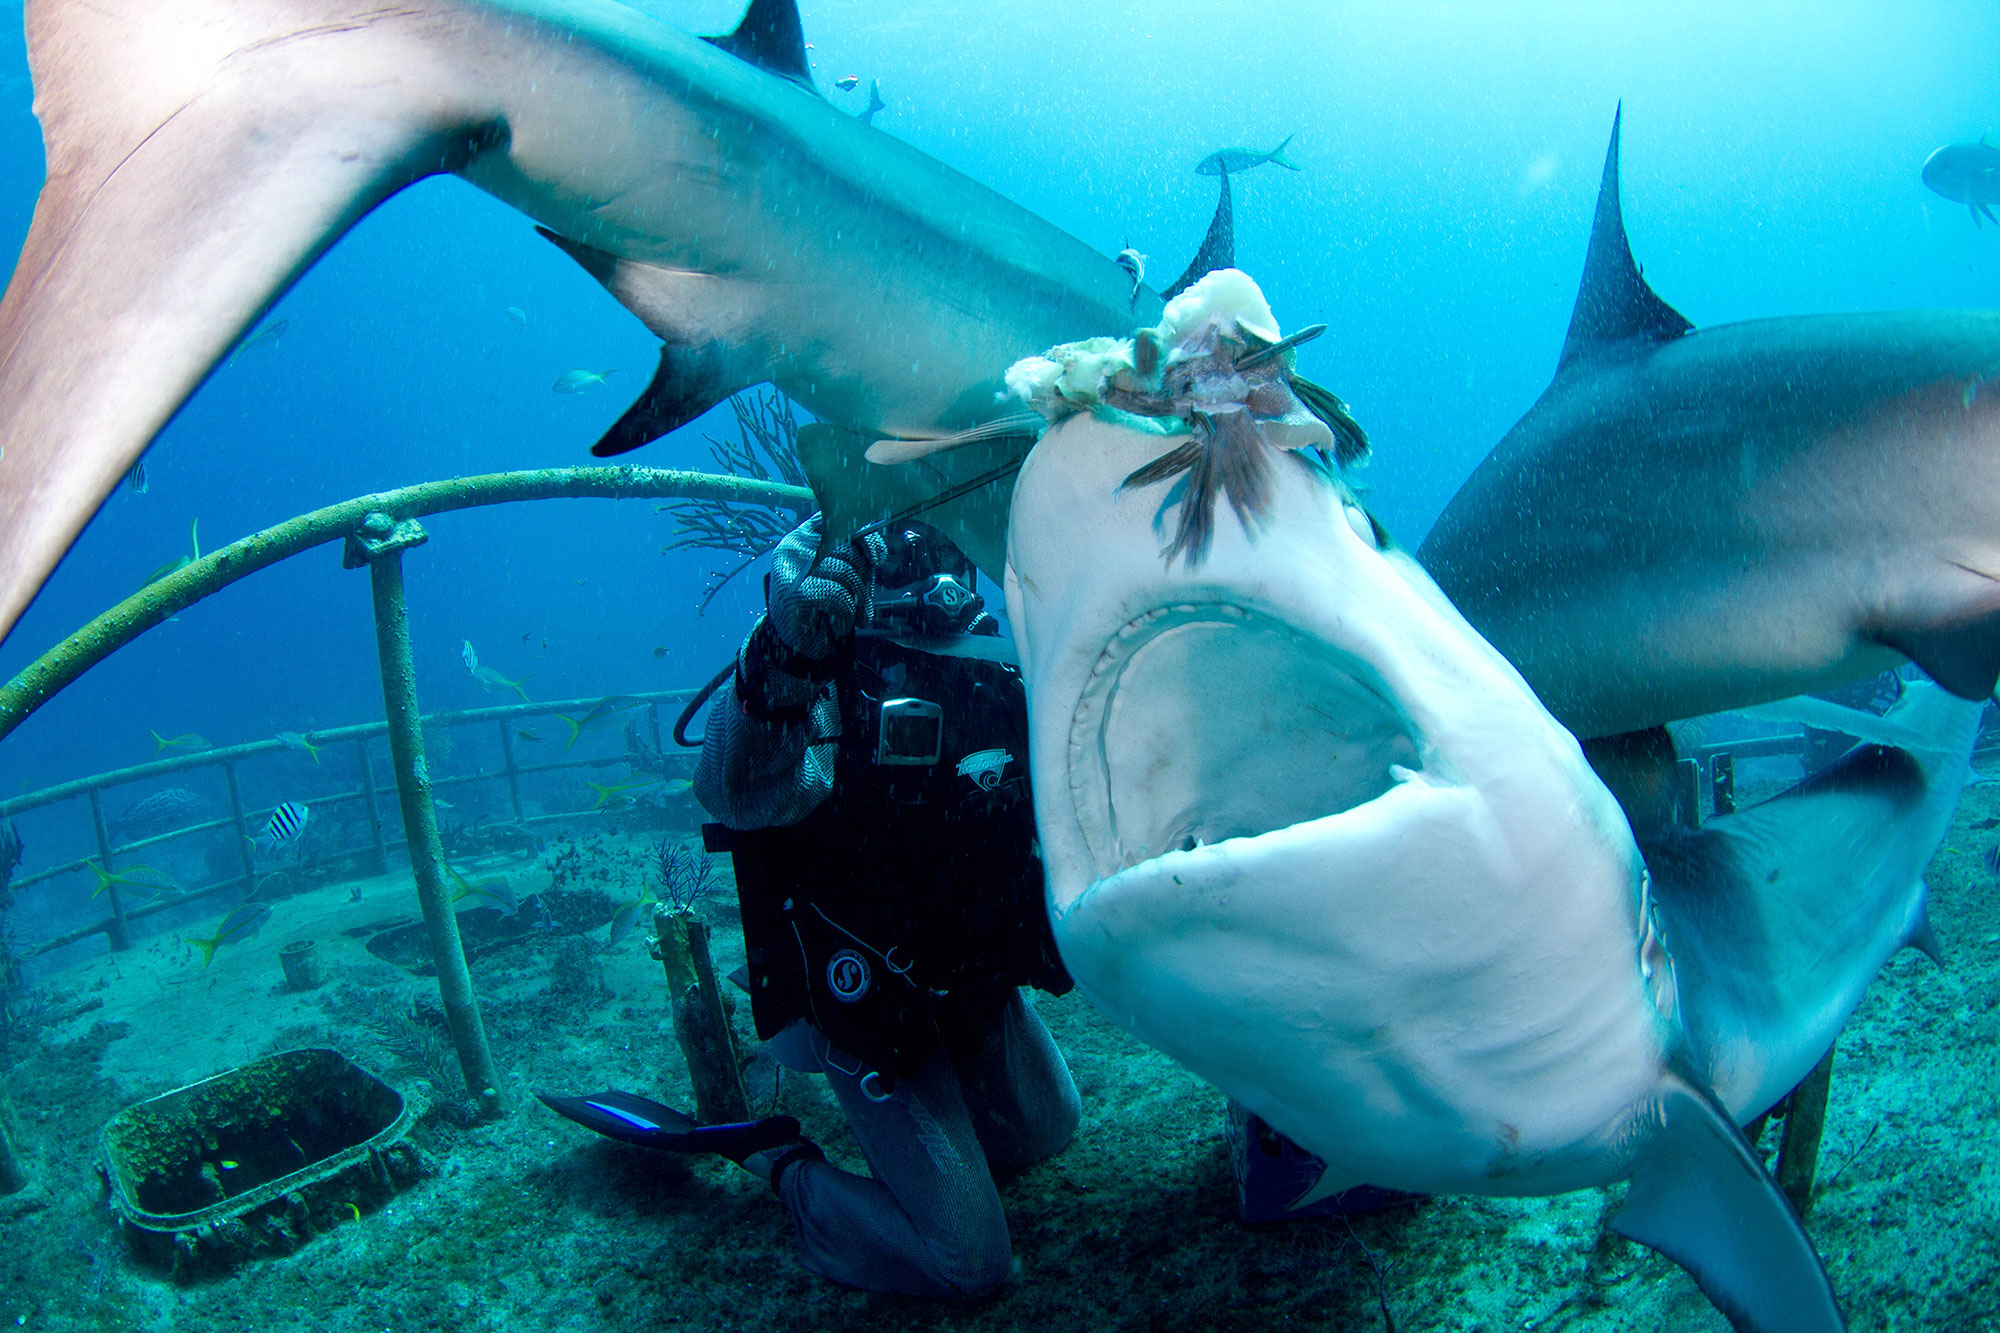 Joi Ito feeding Carribean reef sharks. Photo by <a href="https://www.flickr.com/photos/joi/5594869804/">Sebastien Filion/Stuart Cove's</a>.